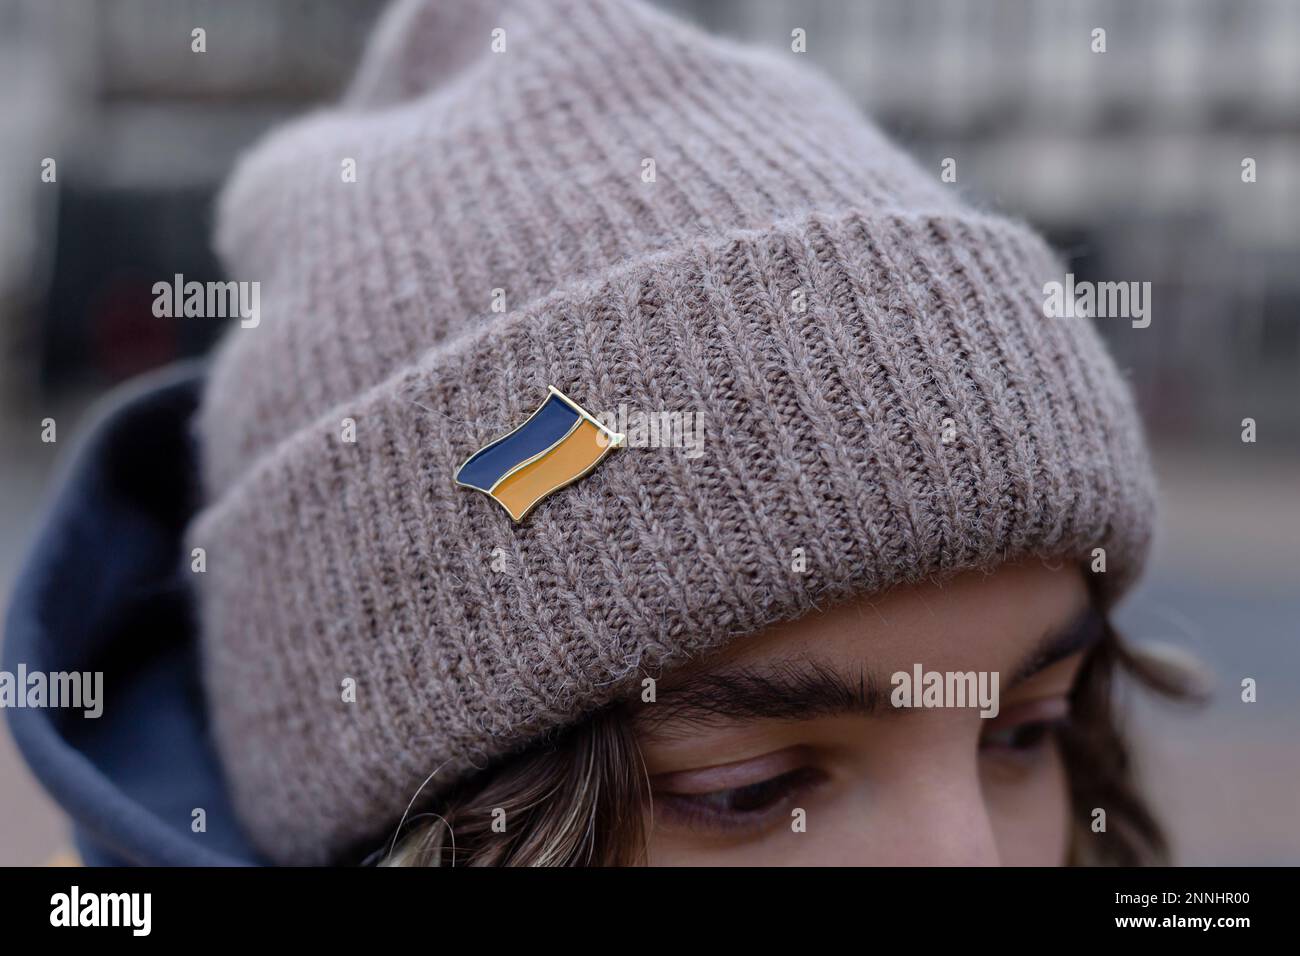 Support Ukraine concept. Close up Portrait of woman with Ukrainian flag icon. Stock Photo